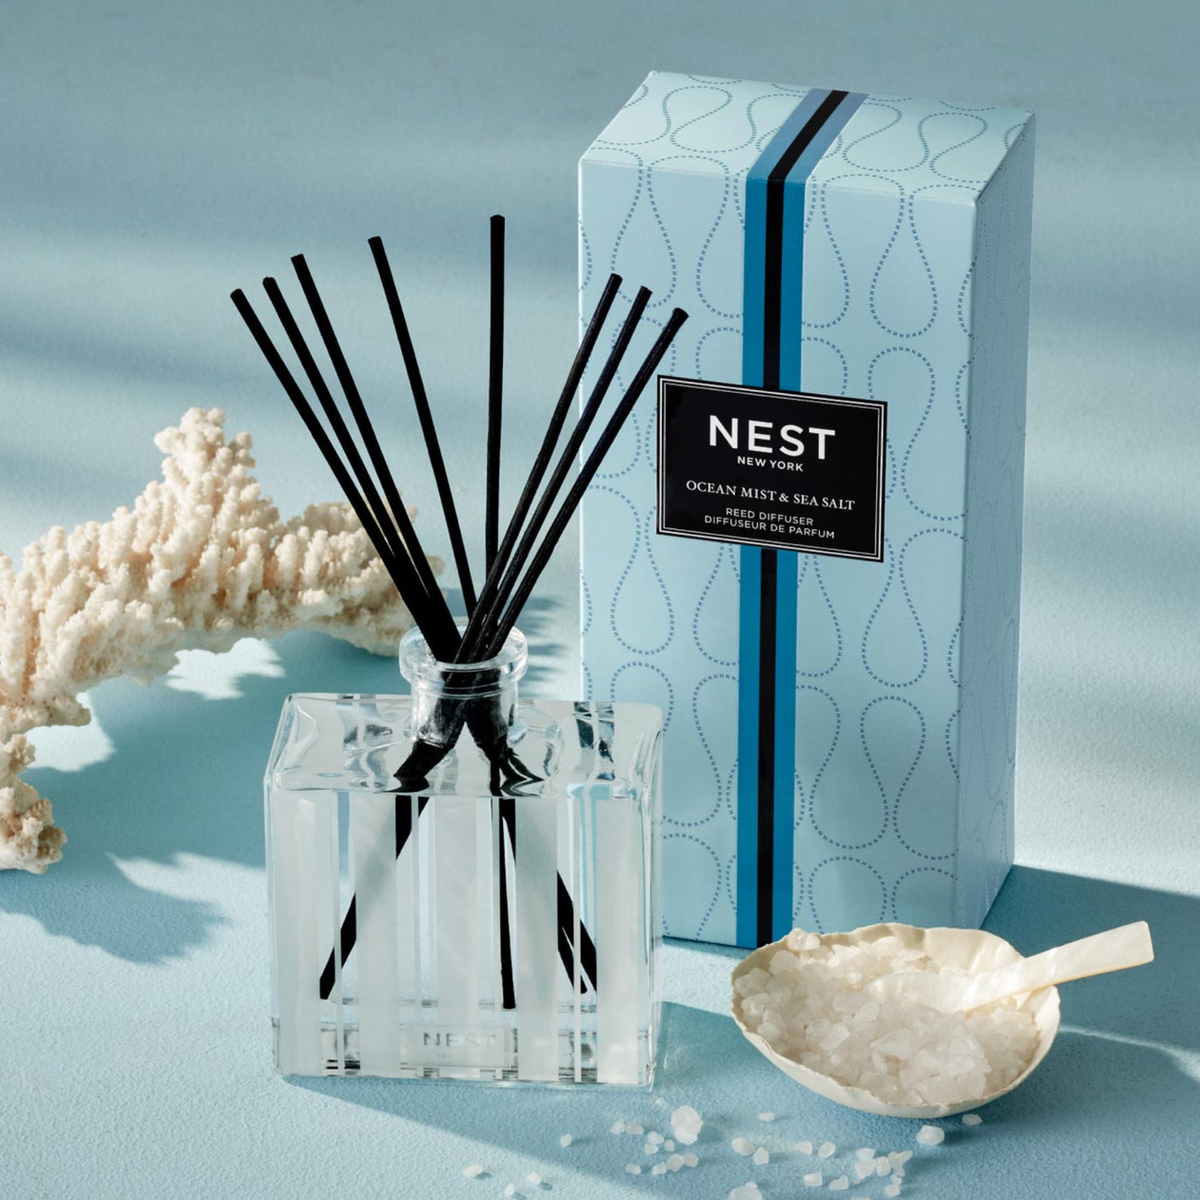 Nest New York Ocean Mist &amp; Sea Salt Reed Diffuser Lifestyle With Box